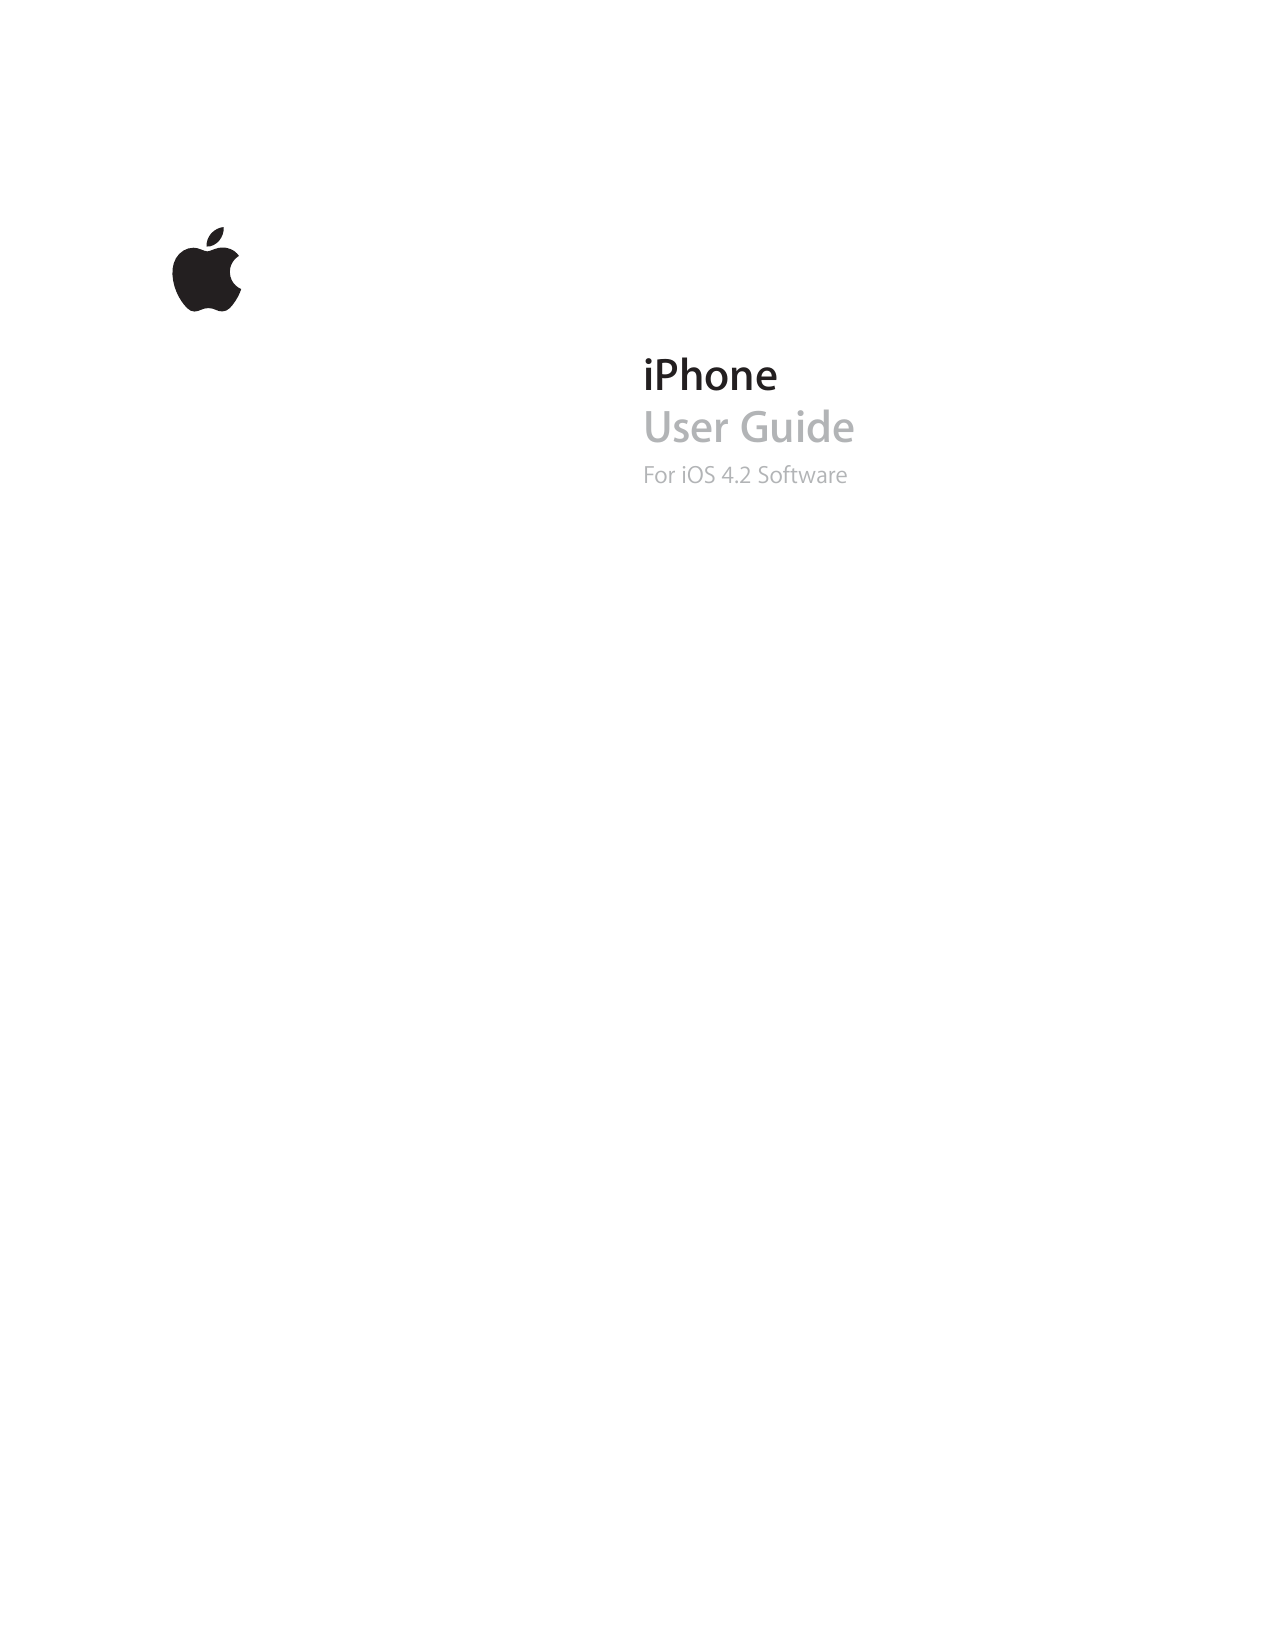 iPhoneUser GuideFor iOS 4.2 Software